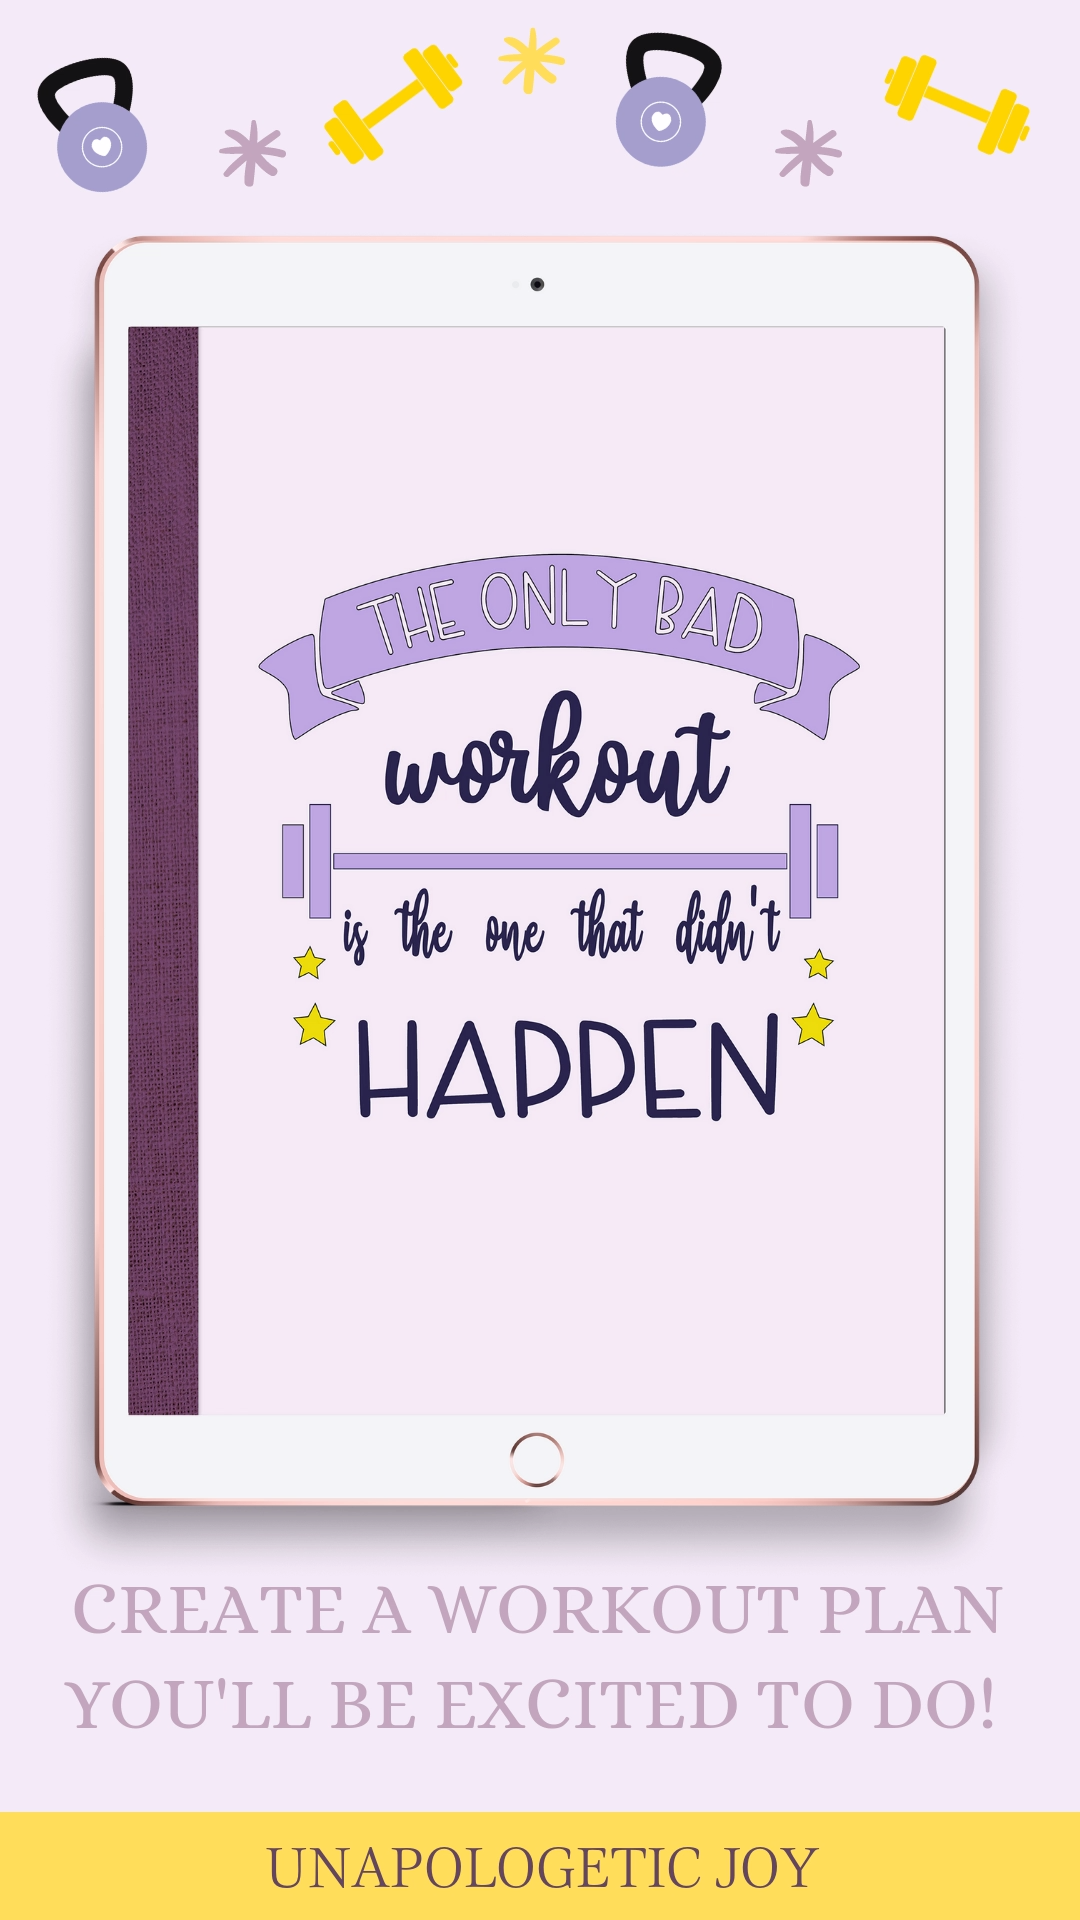 No Bad Workout Digital Fitness Planner -   fitbook fitness Journal